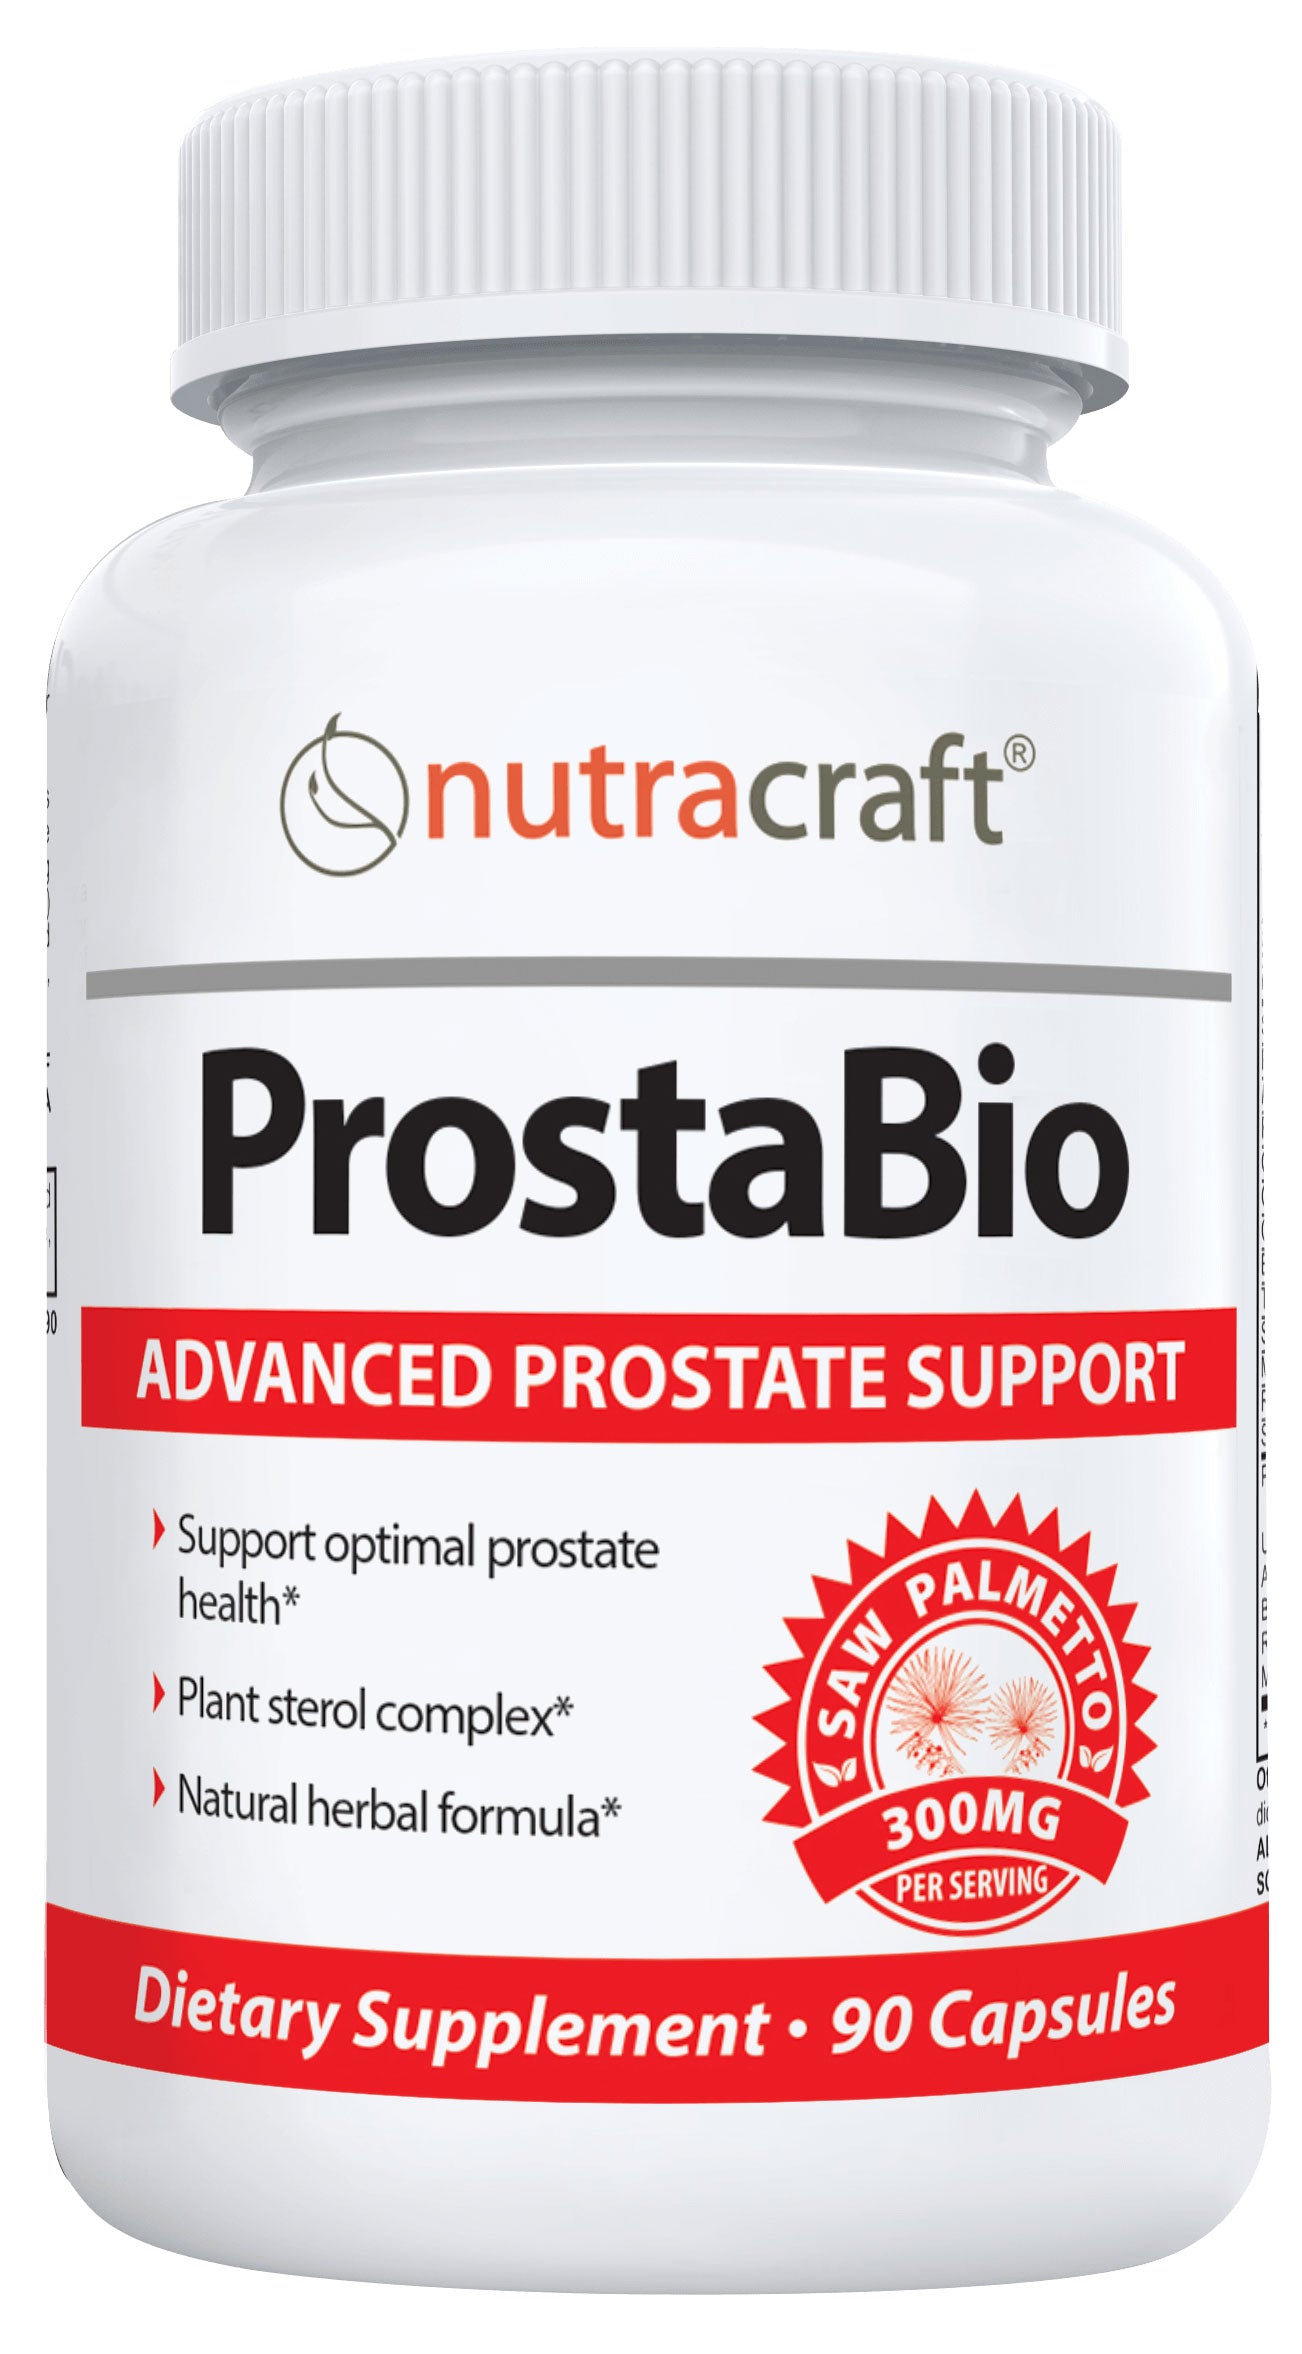 100disparition: Super Beta Prostate Vitamin Side Effects